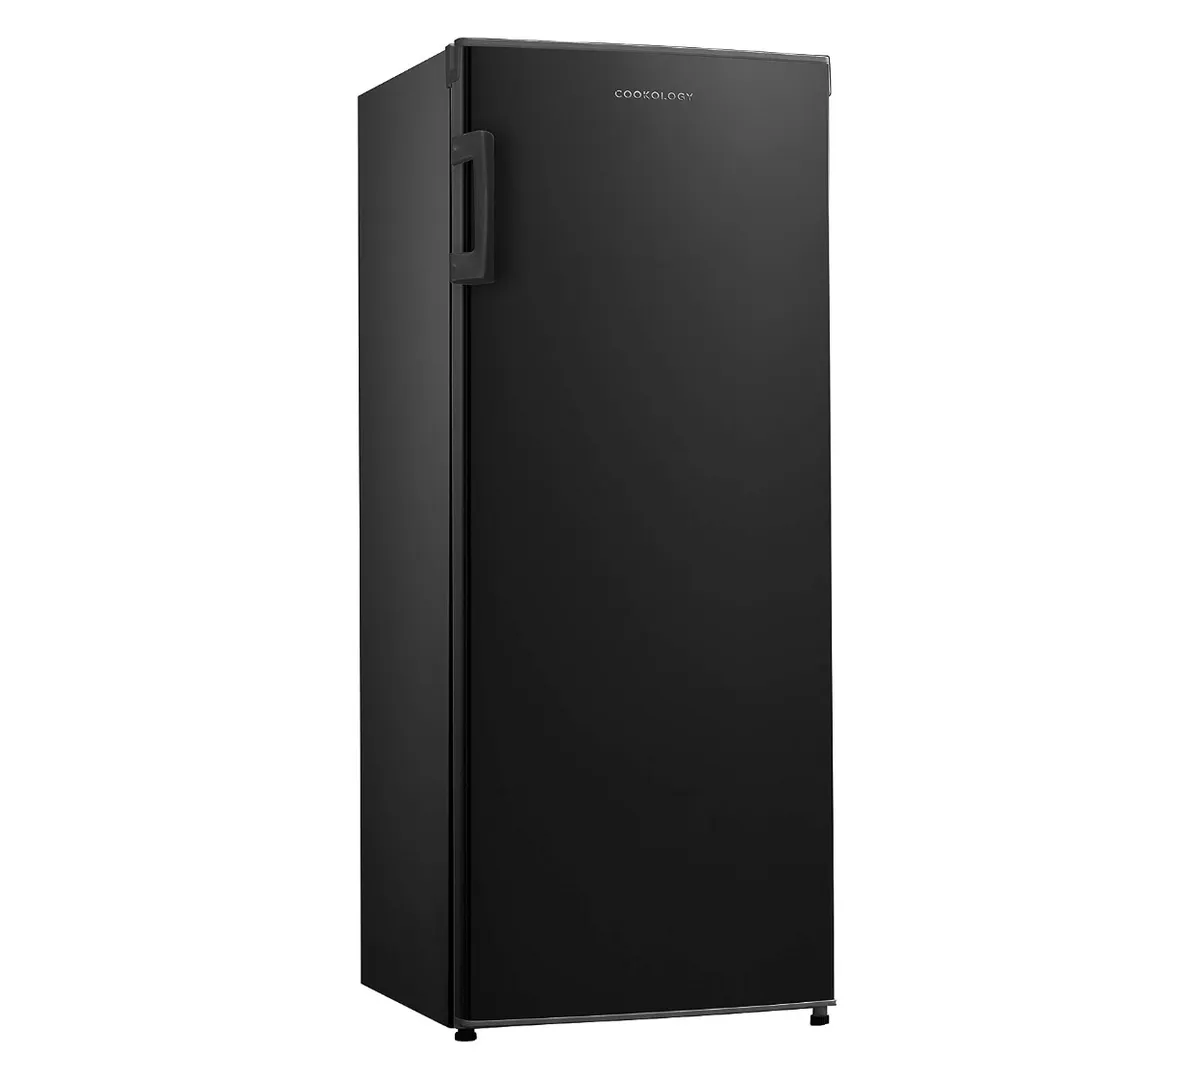 Cookology CTFZ160BK Tall Freestanding Upright Freezer £319.99 £254.99 (save 20%)